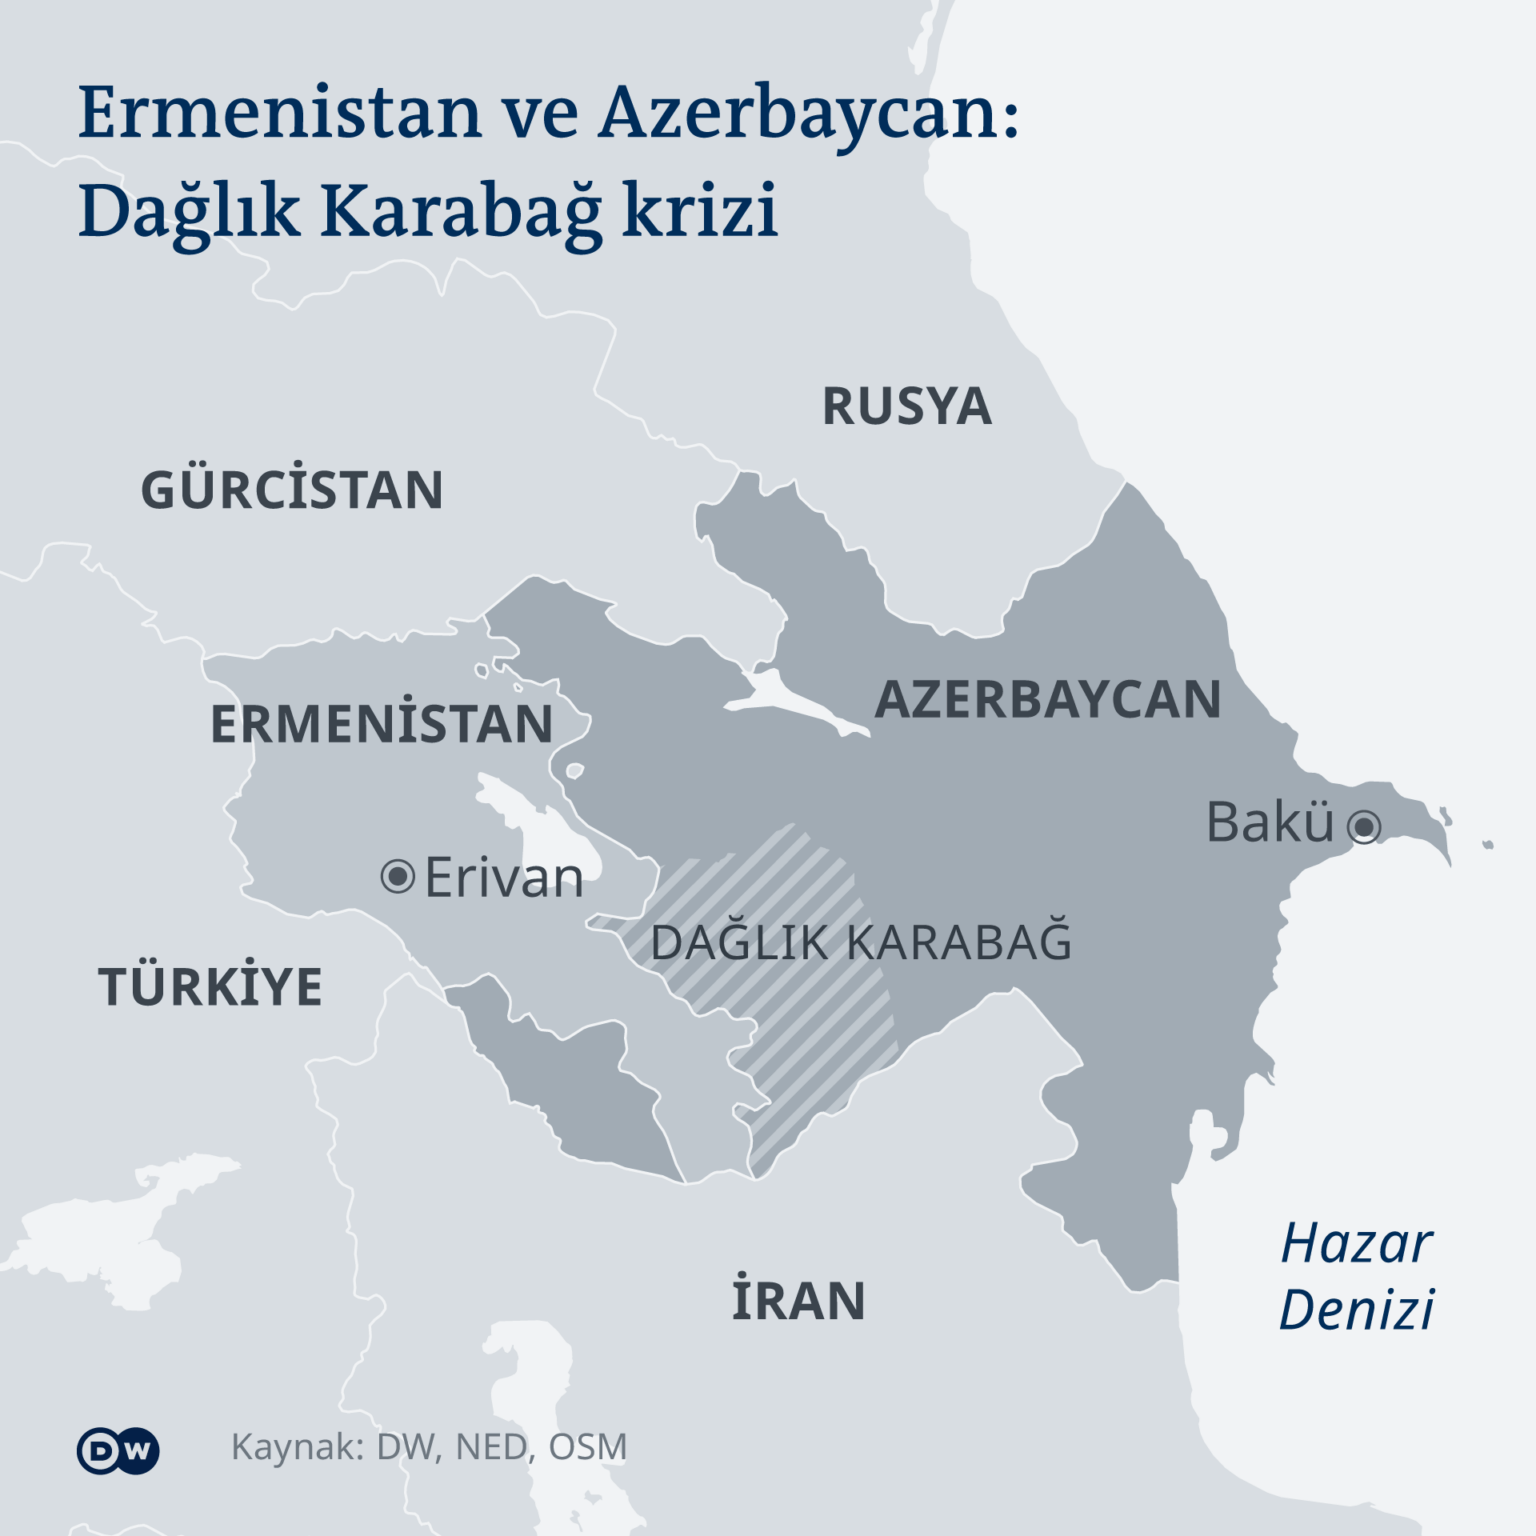 Турция и Азербайджан на карте